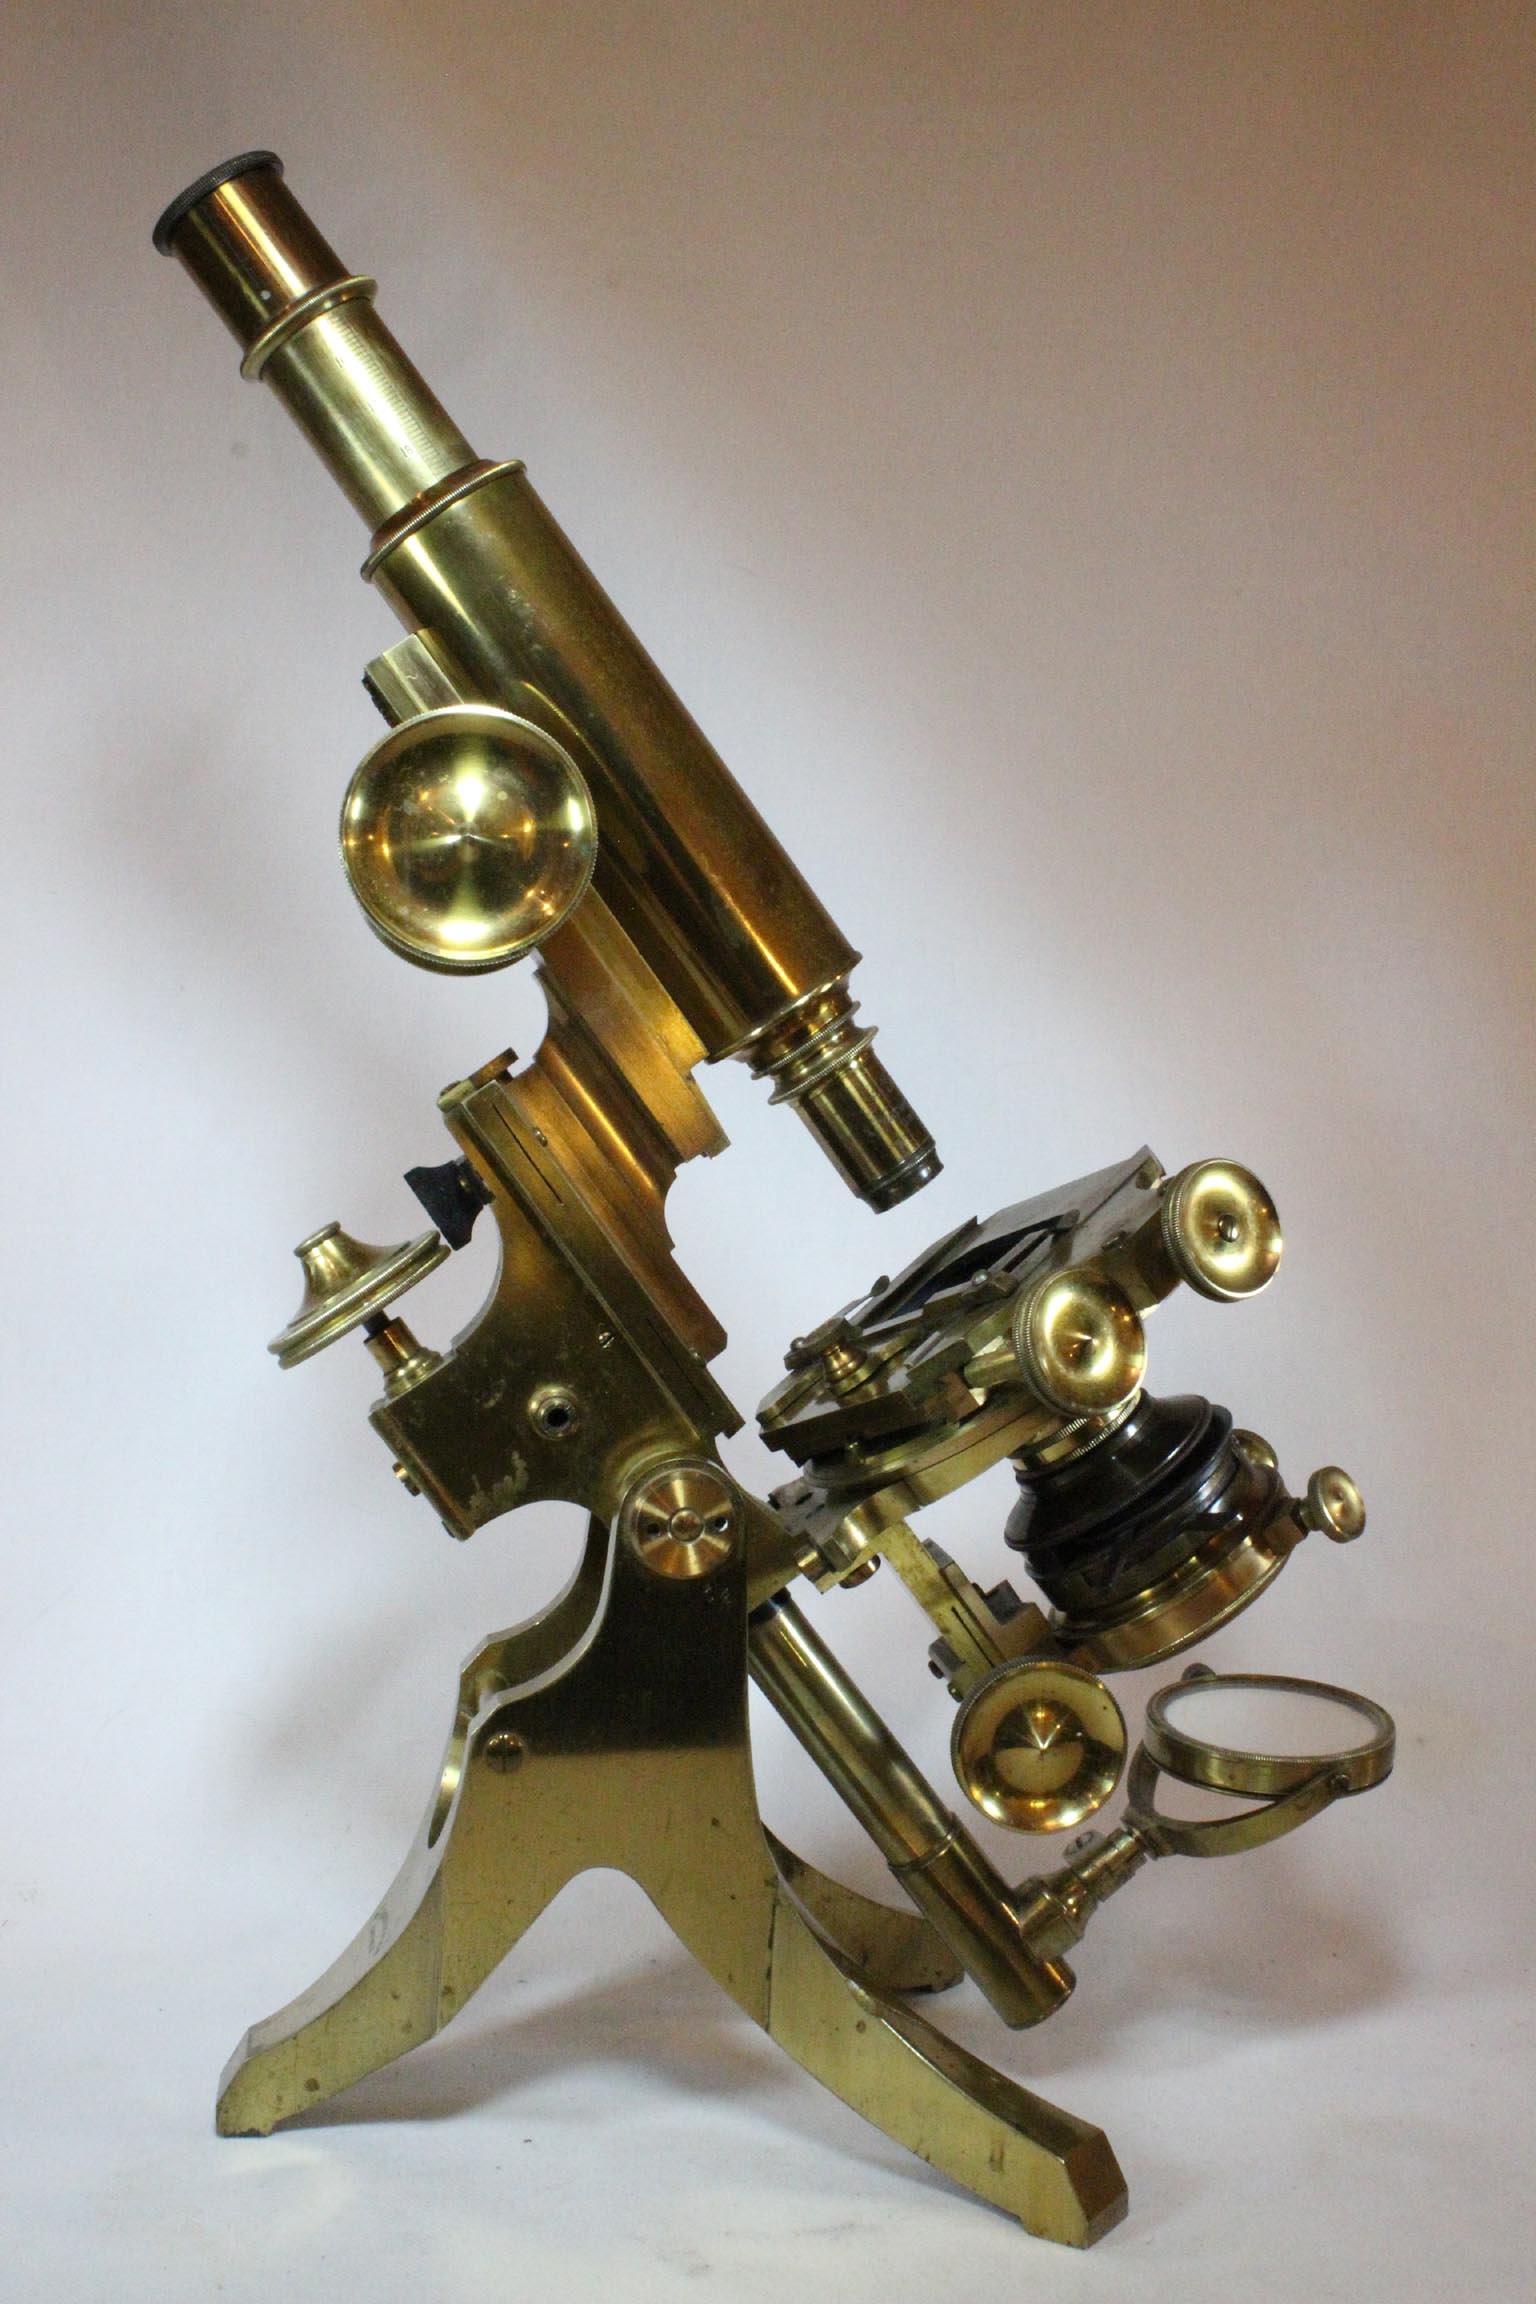 Fairservice Microscope